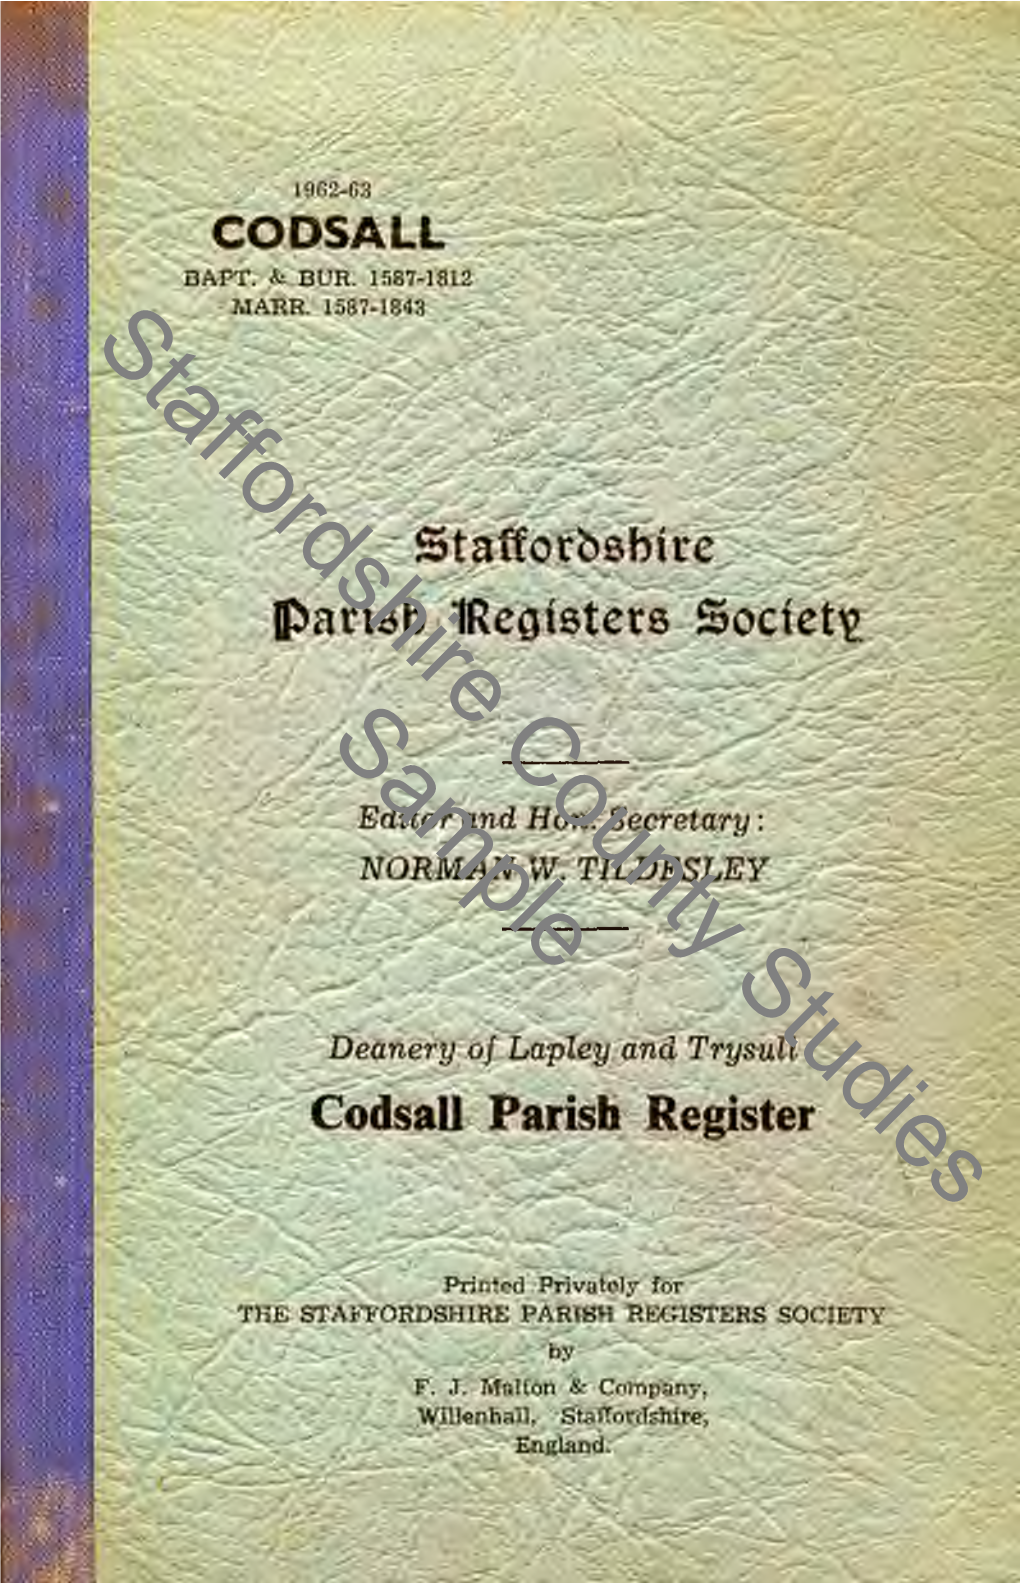 Codsall Parish Register, 1587-1812 (Marr. to 1843)